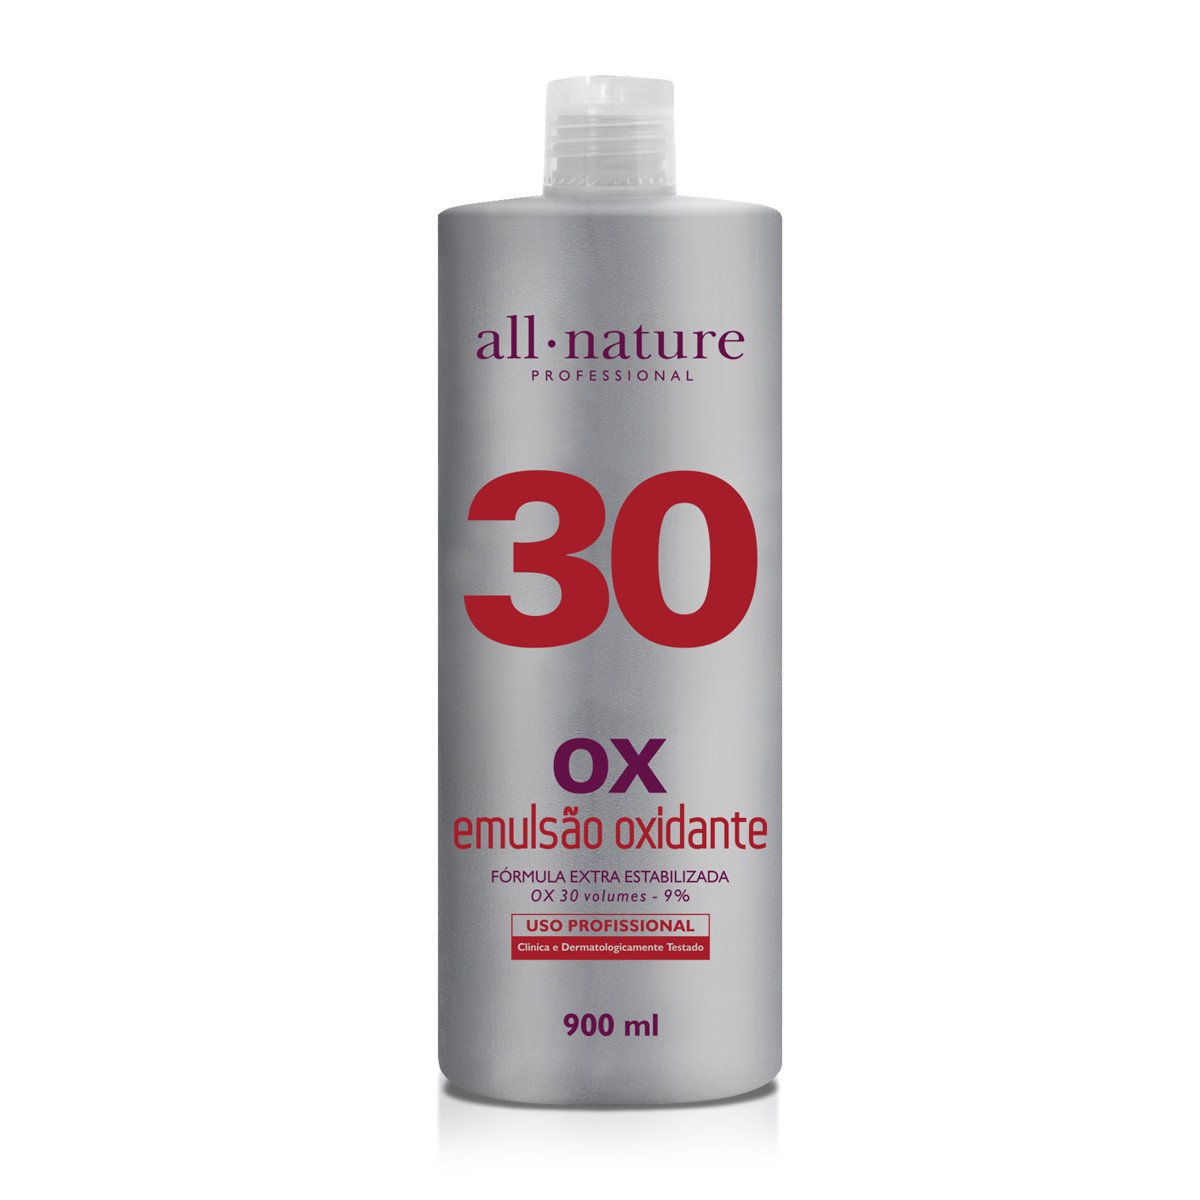 All Nature Brazilian Keratin Treatment Oxidizing Emulsion OX Discoloration Treatment 30 Vol. 9% 900ml - All Nature